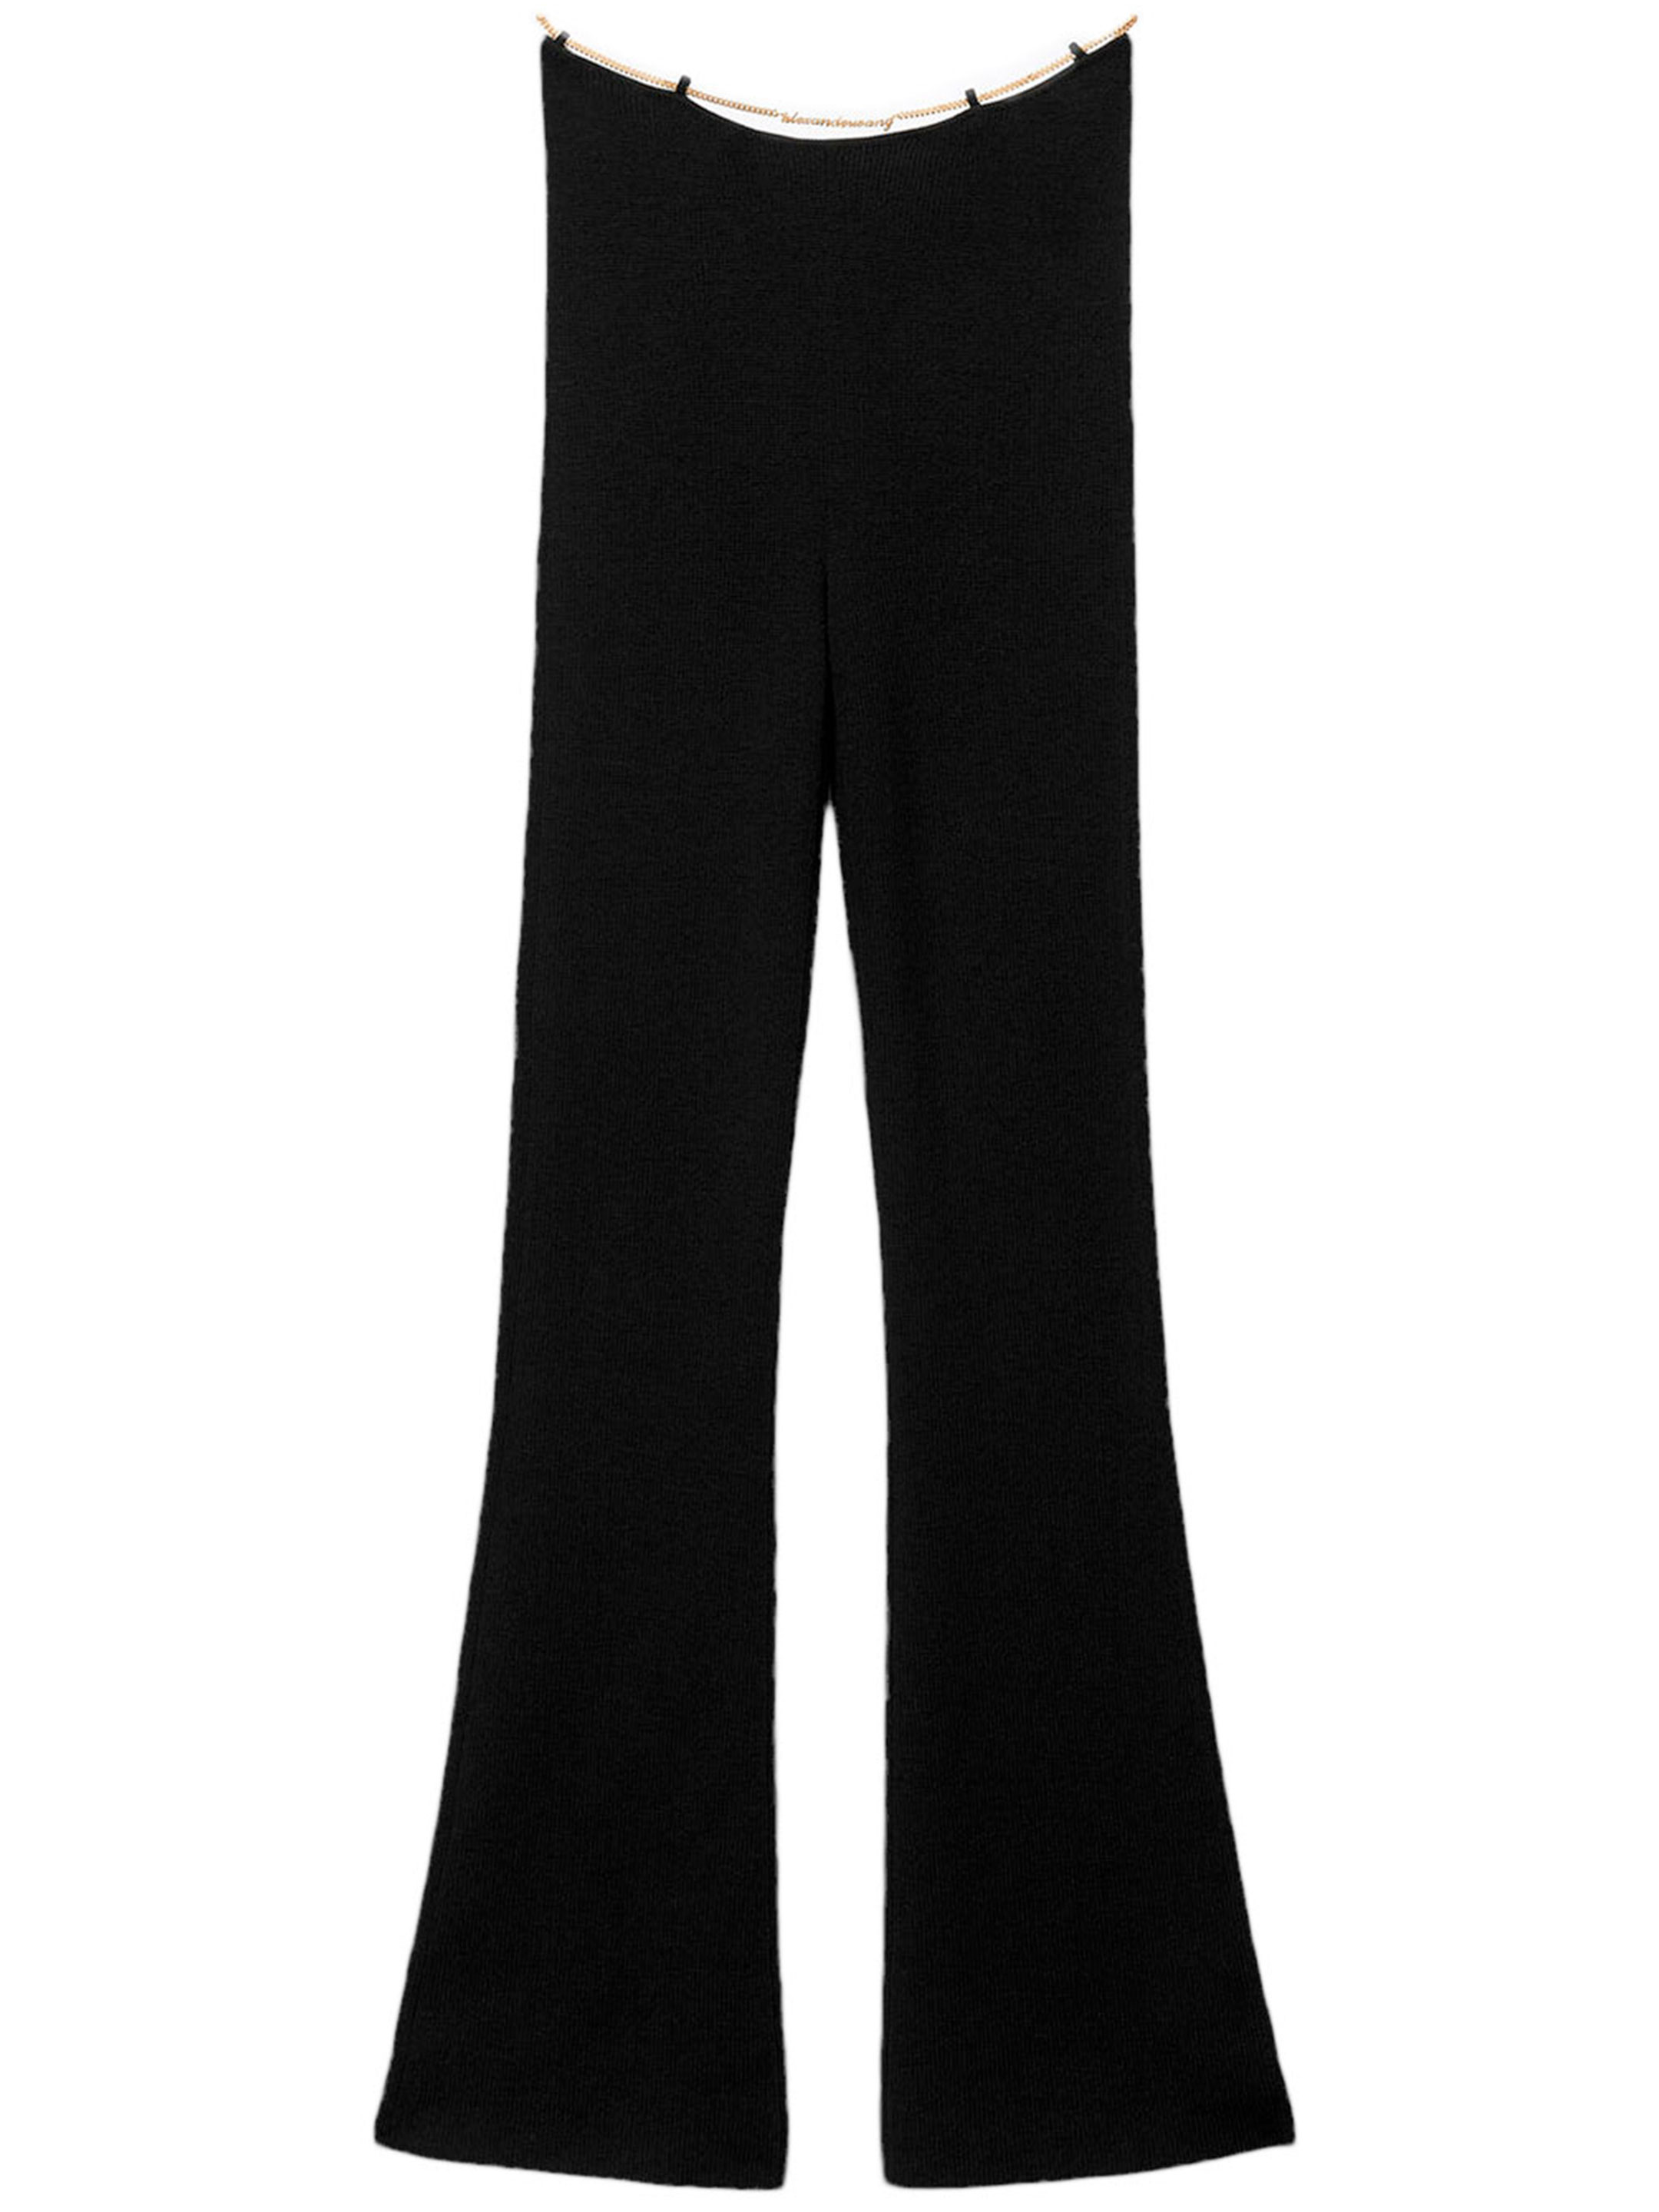 Брюки Alexander Wang Merino wool bootcut, черный брюки alexander wang tailored with elasticated waist черный